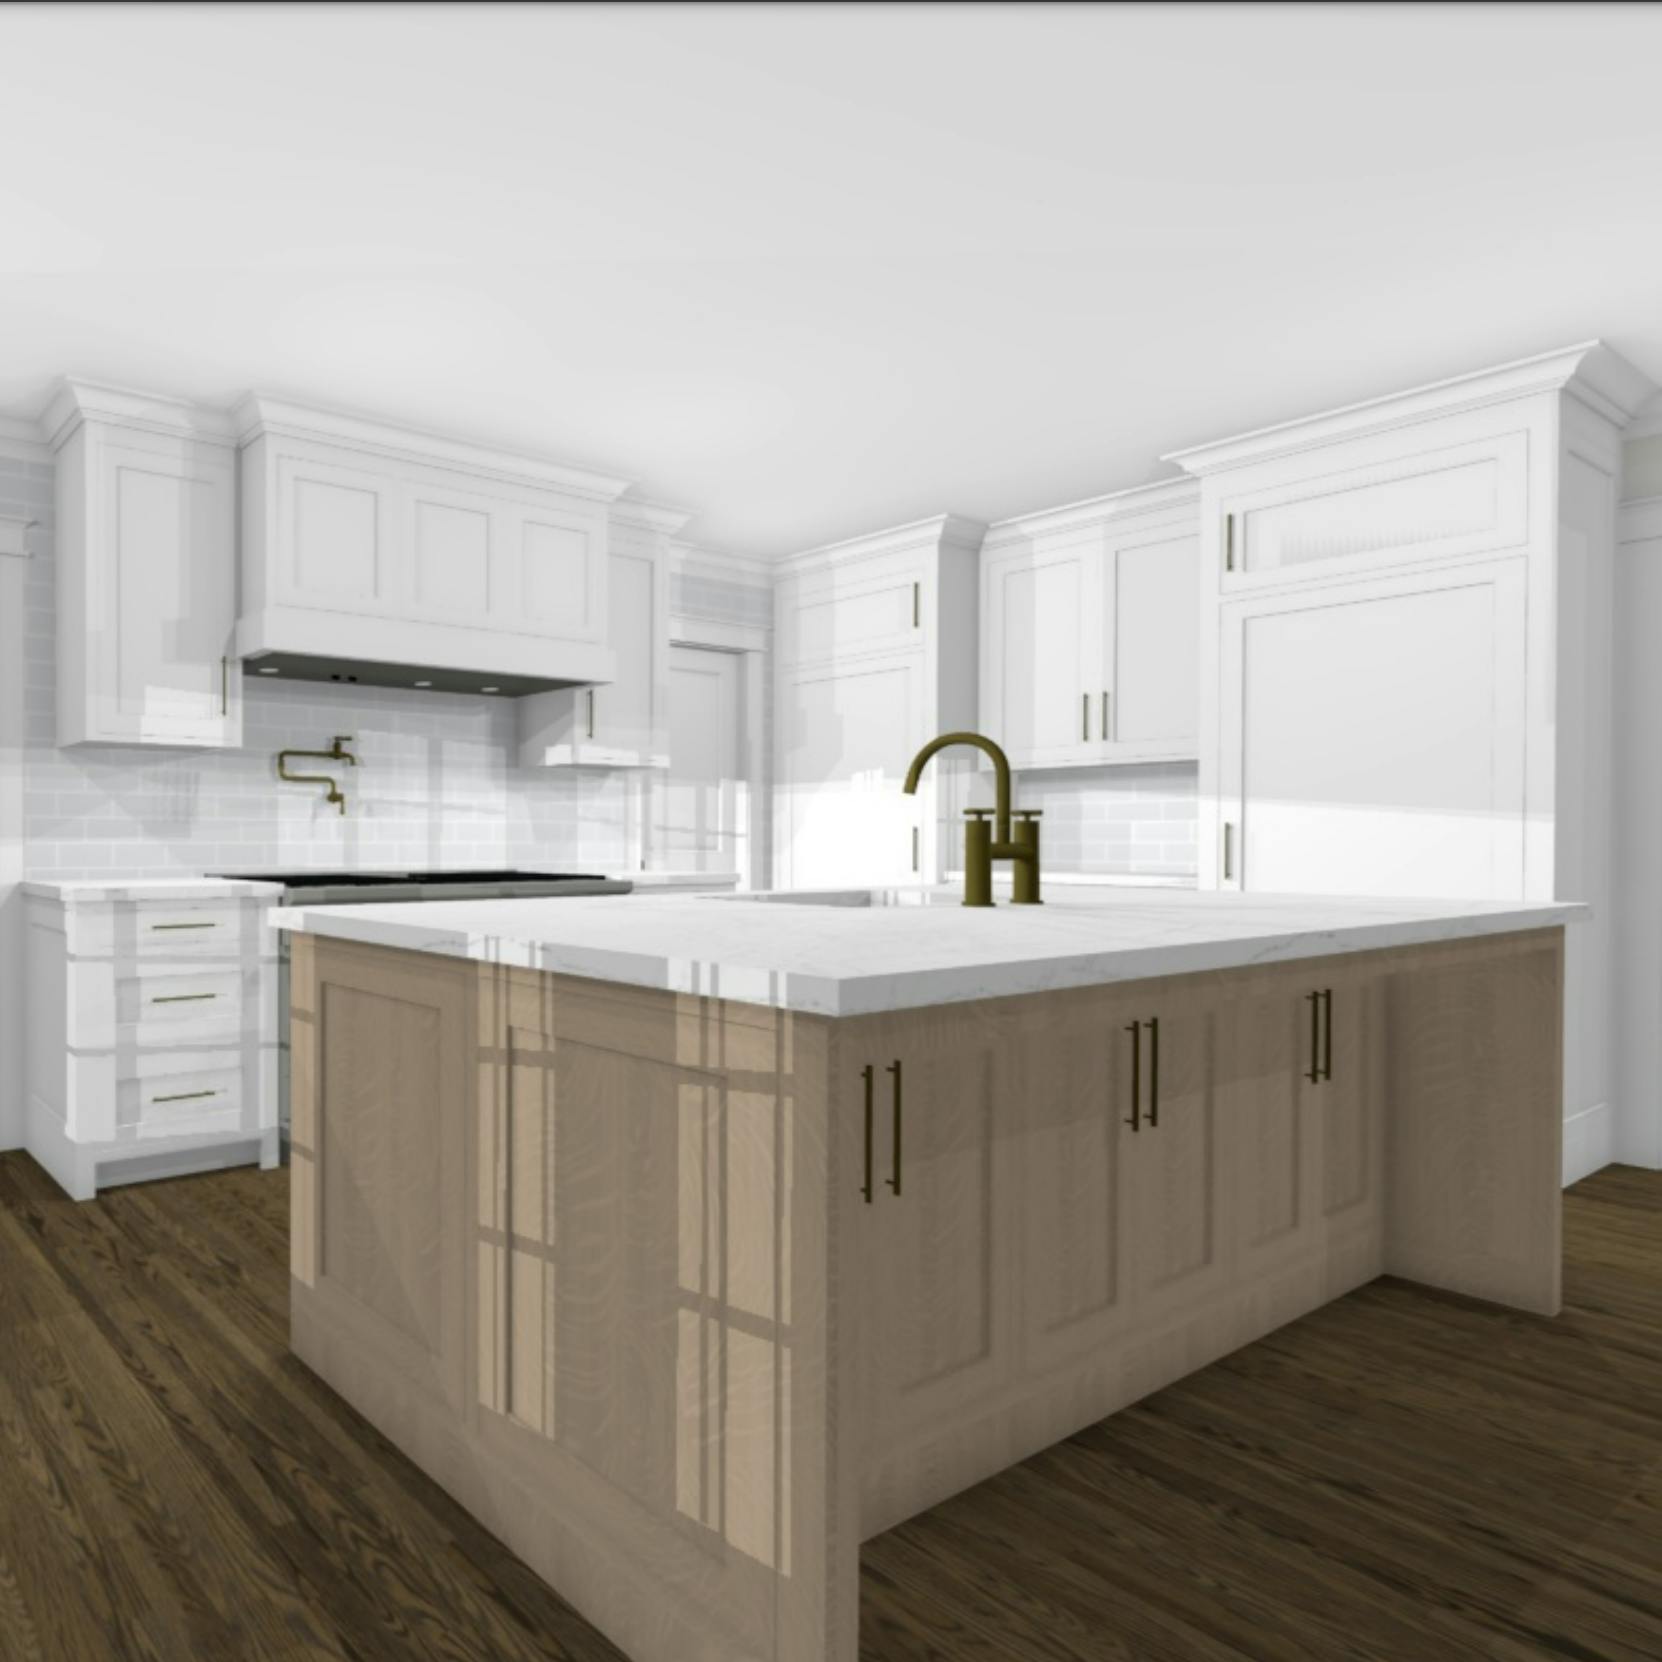 3D kitchen rendering